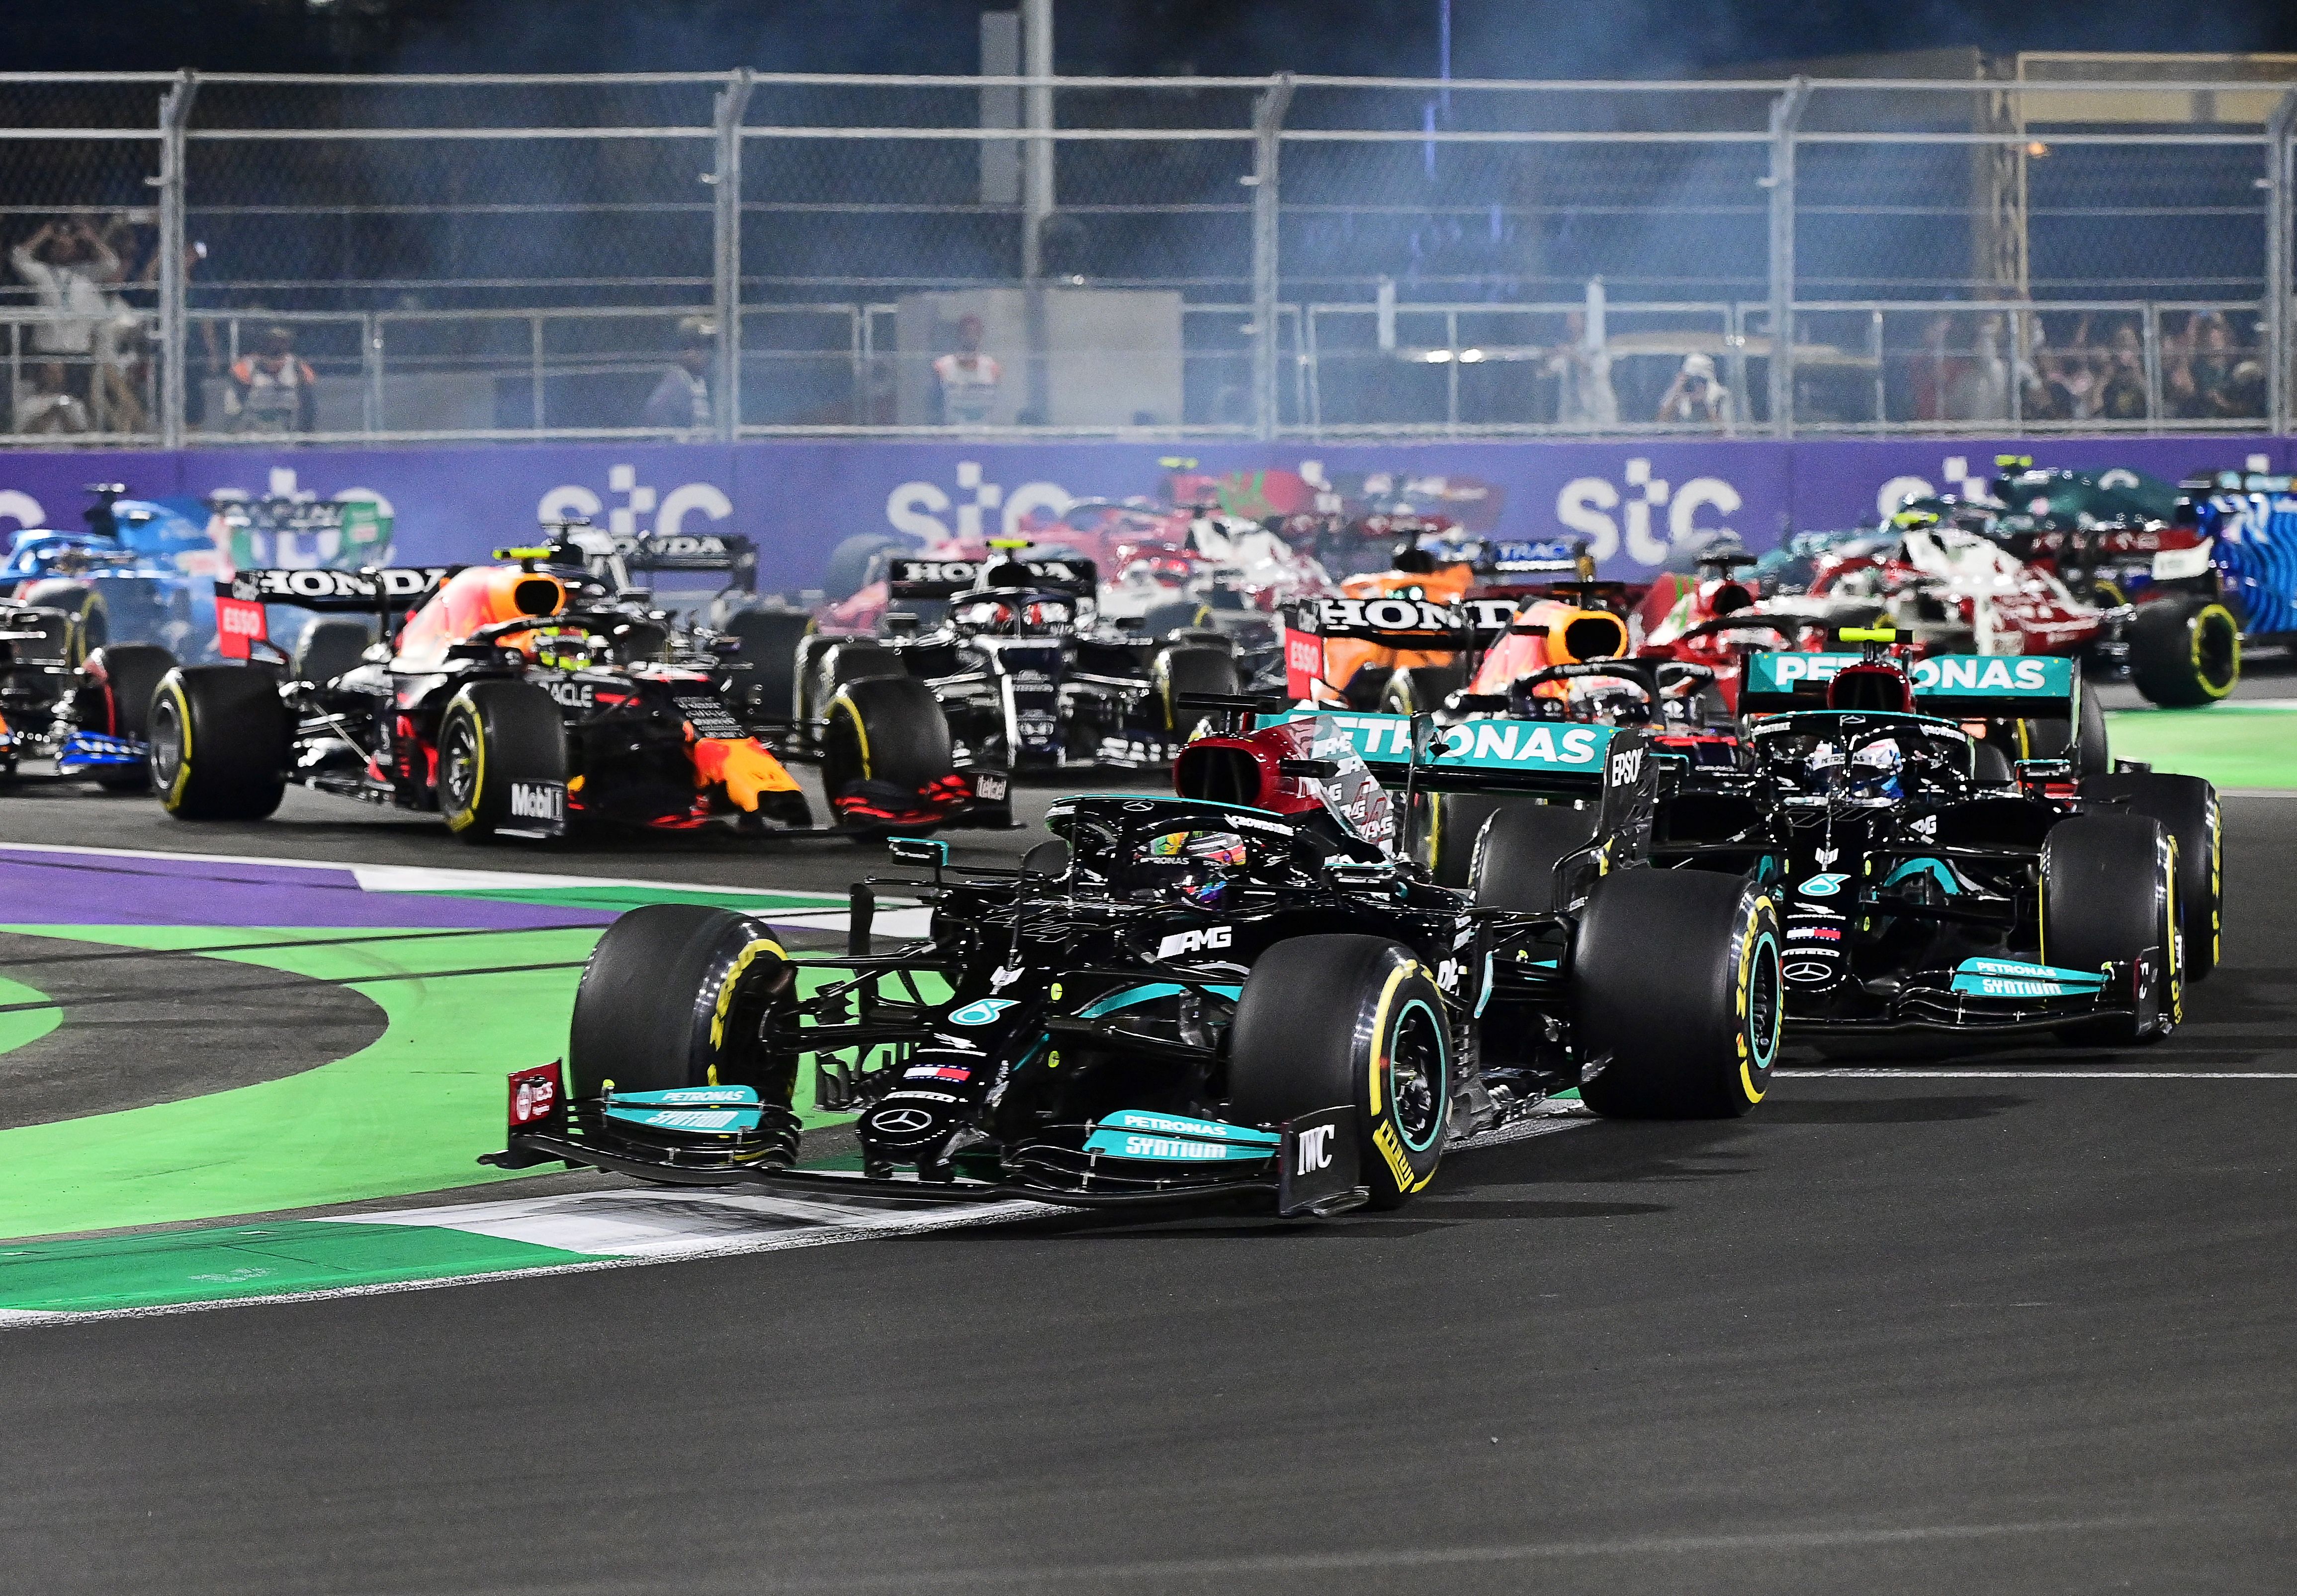 Lewis Hamilton won a dramatic race in Saudi Arabia last season